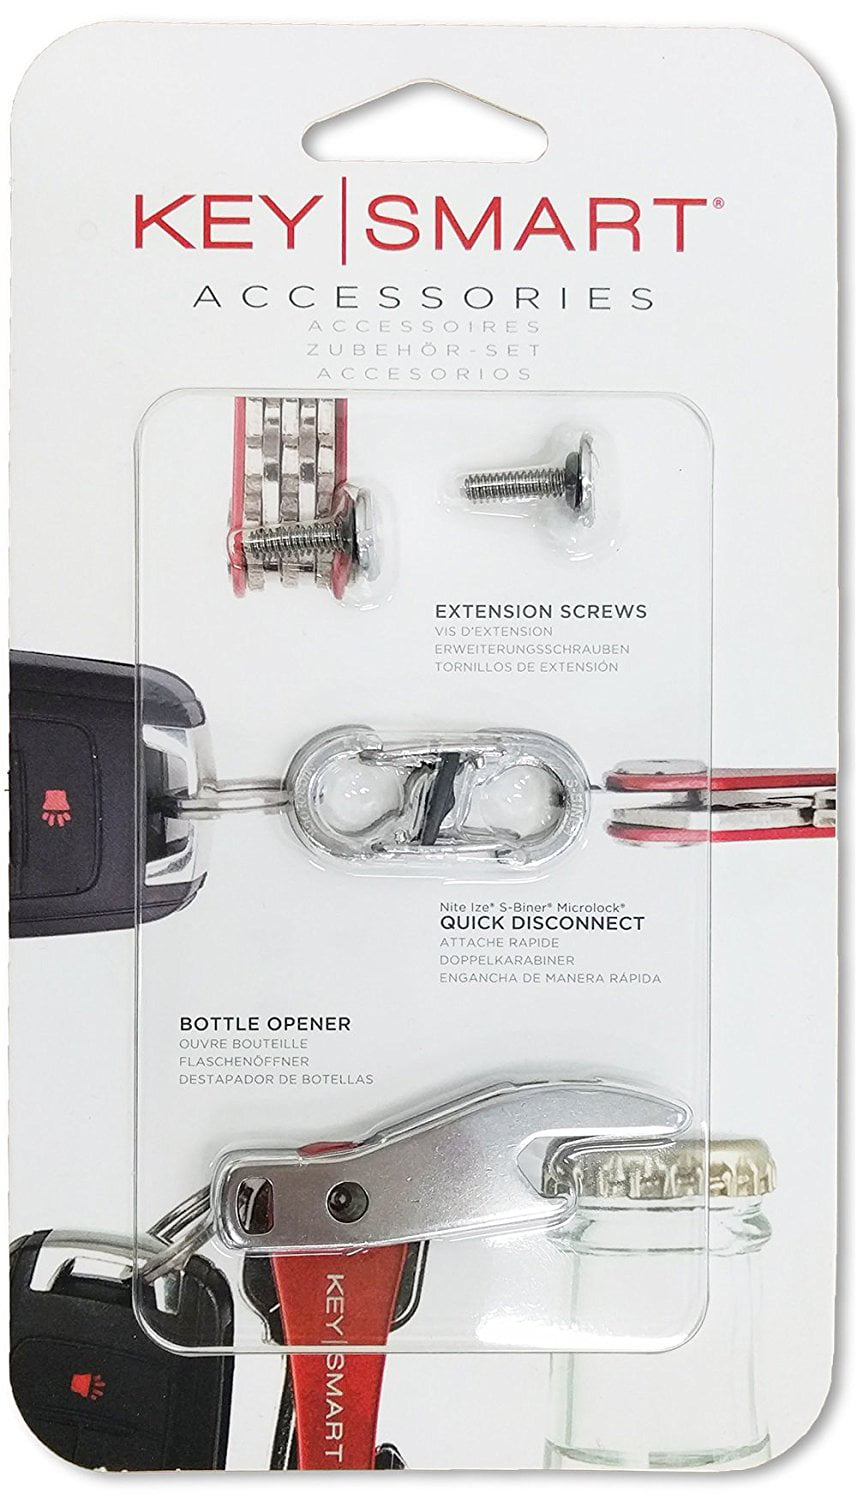 KeySmart Compact Key Holder Add-on Accessory Stainless Steel Bottle Opener Midnight Diamond